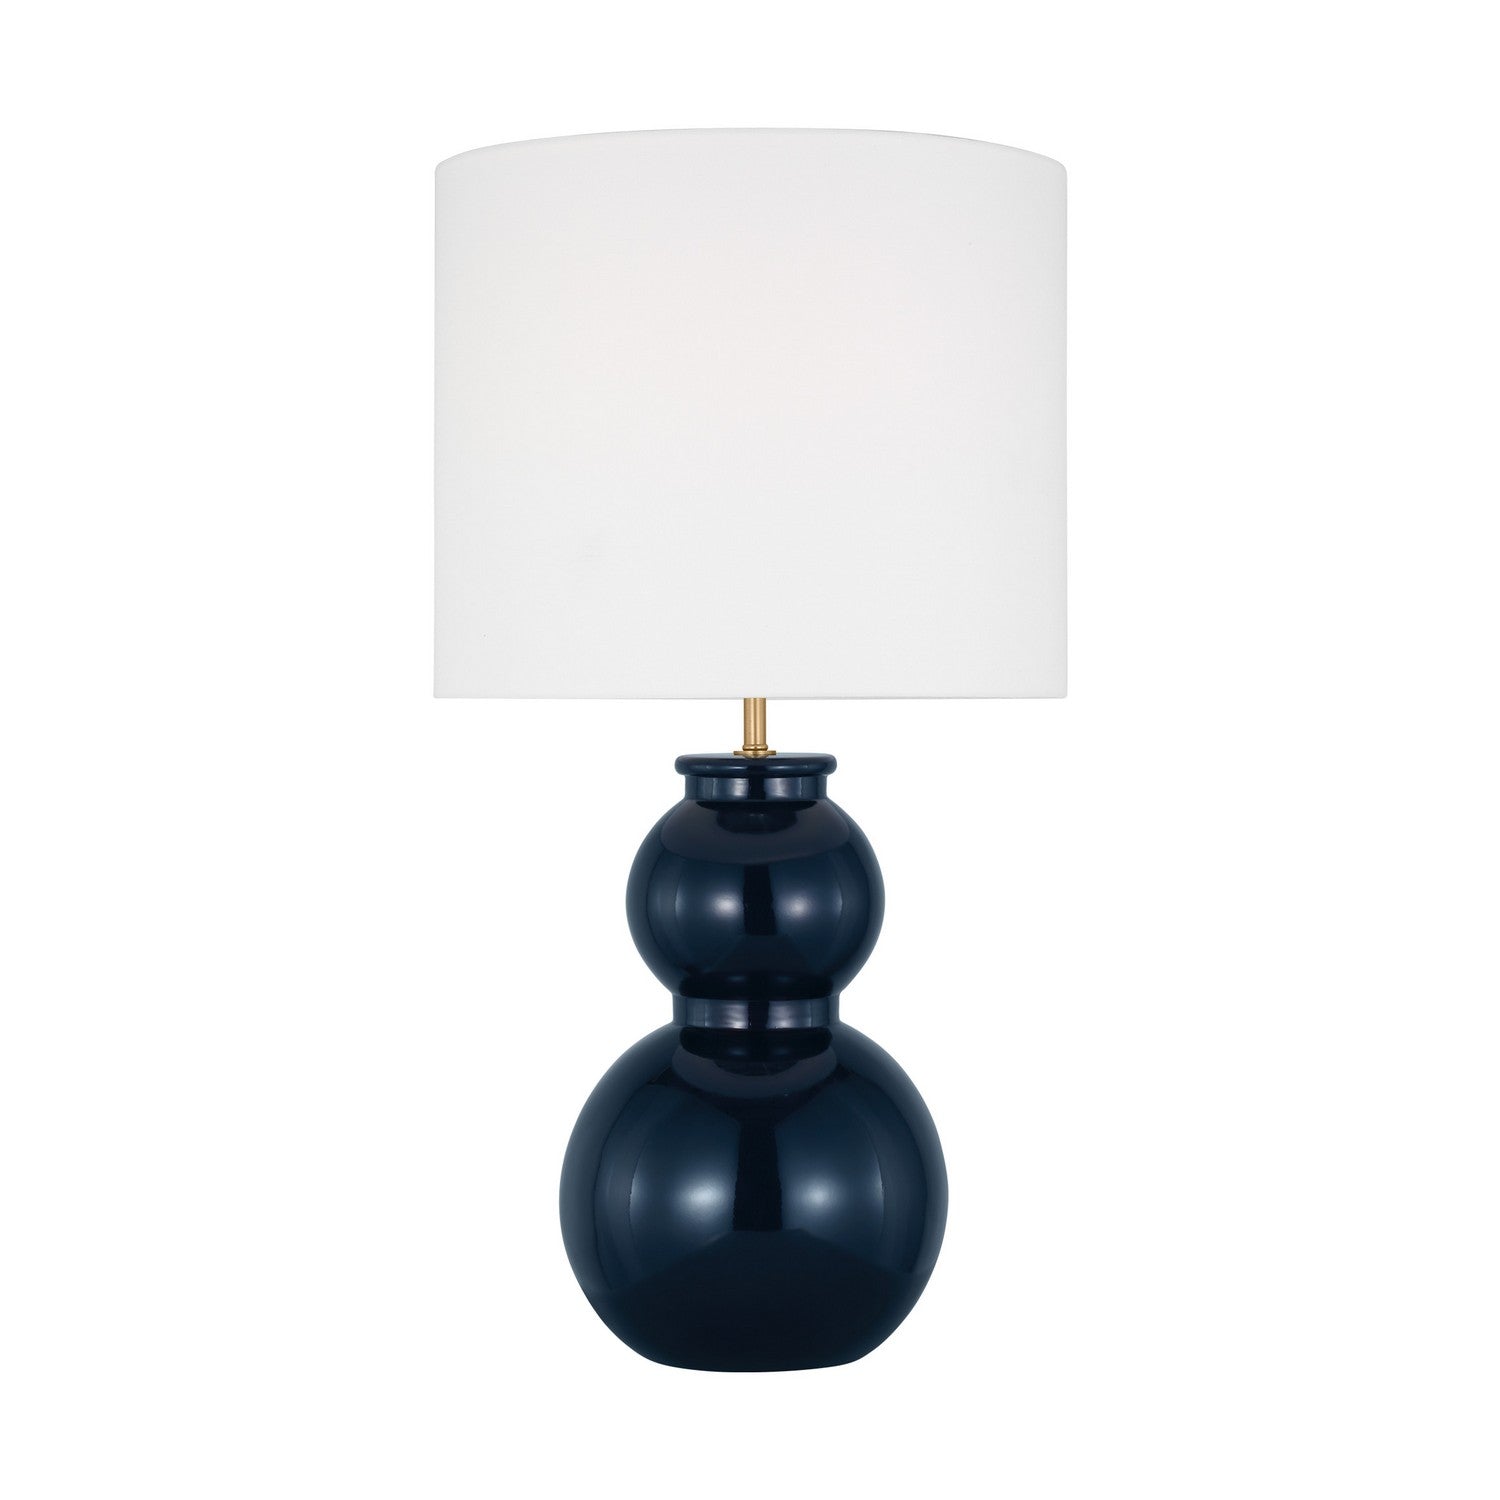 Visual Comfort Studio Canada - DJT1051GNV1 - One Light Table Lamp - Buckley - Gloss Navy